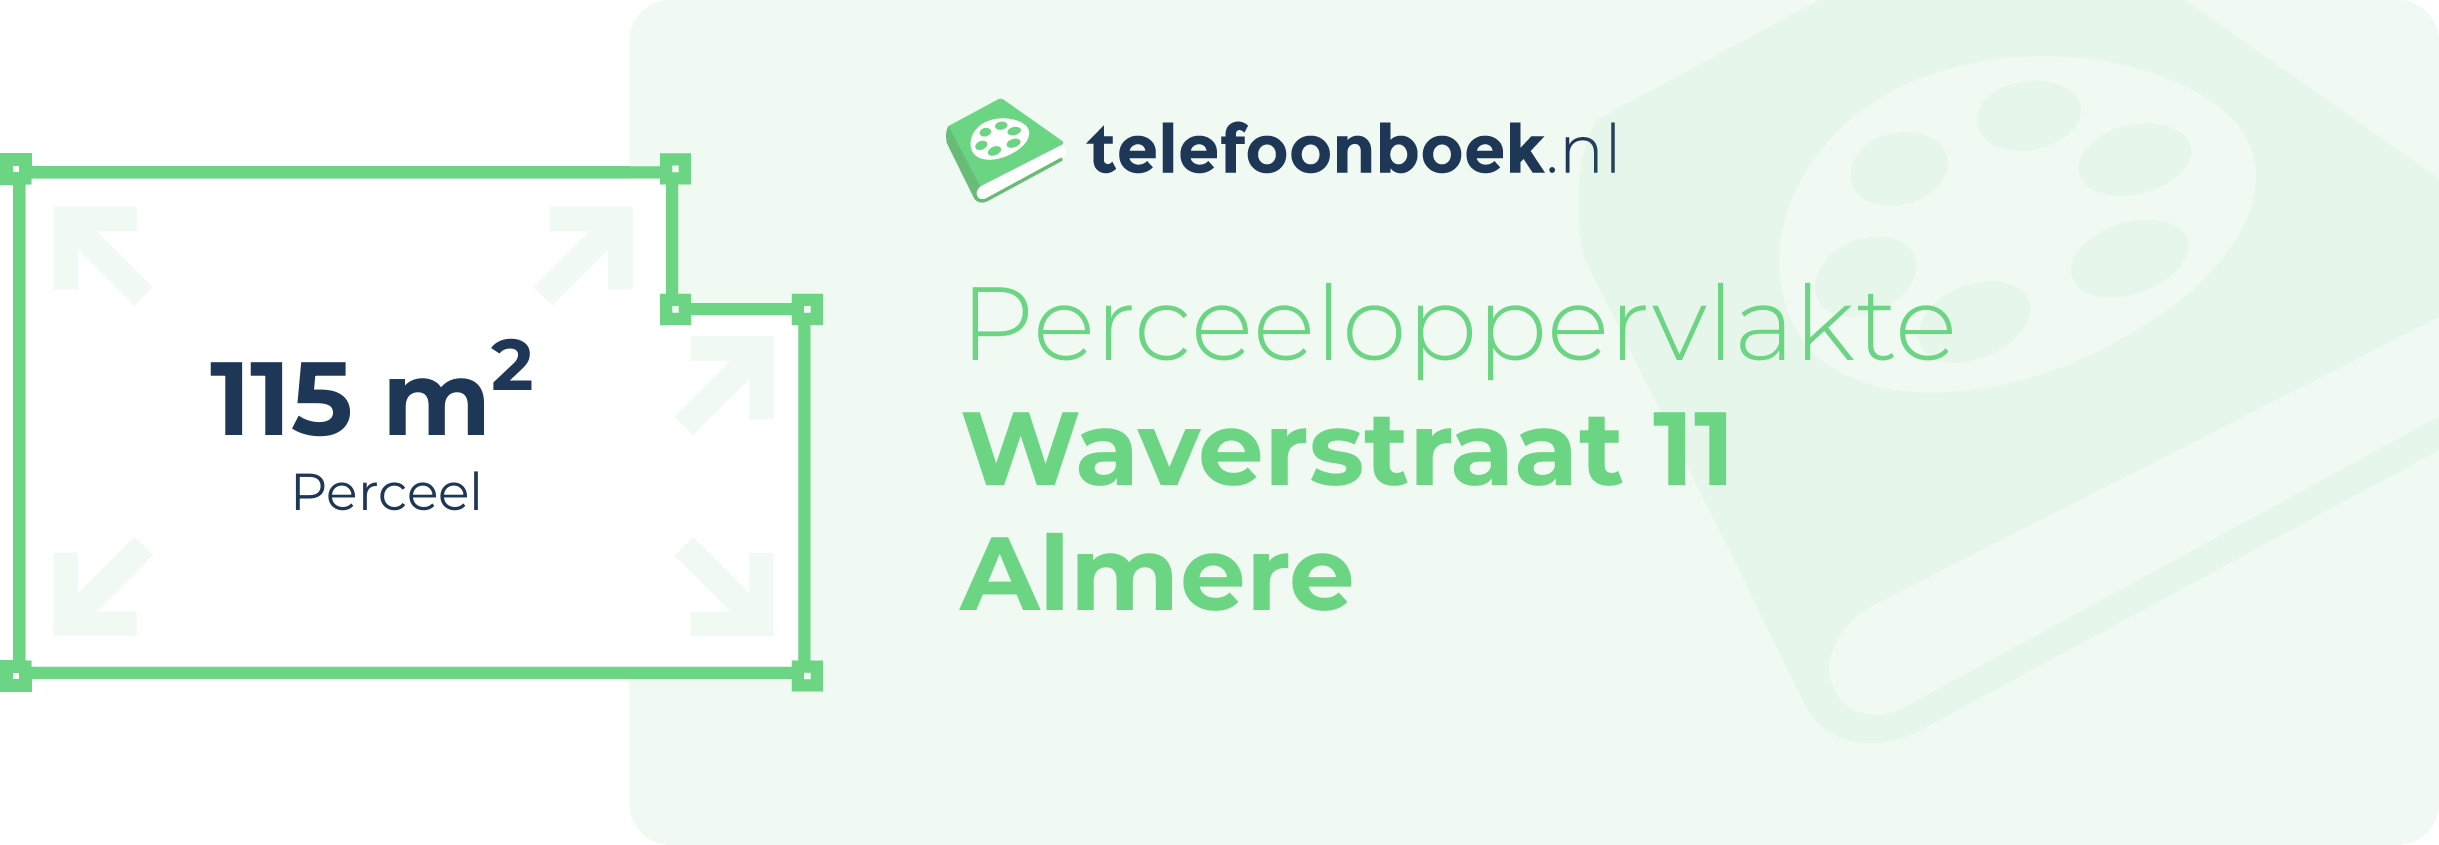 Perceeloppervlakte Waverstraat 11 Almere